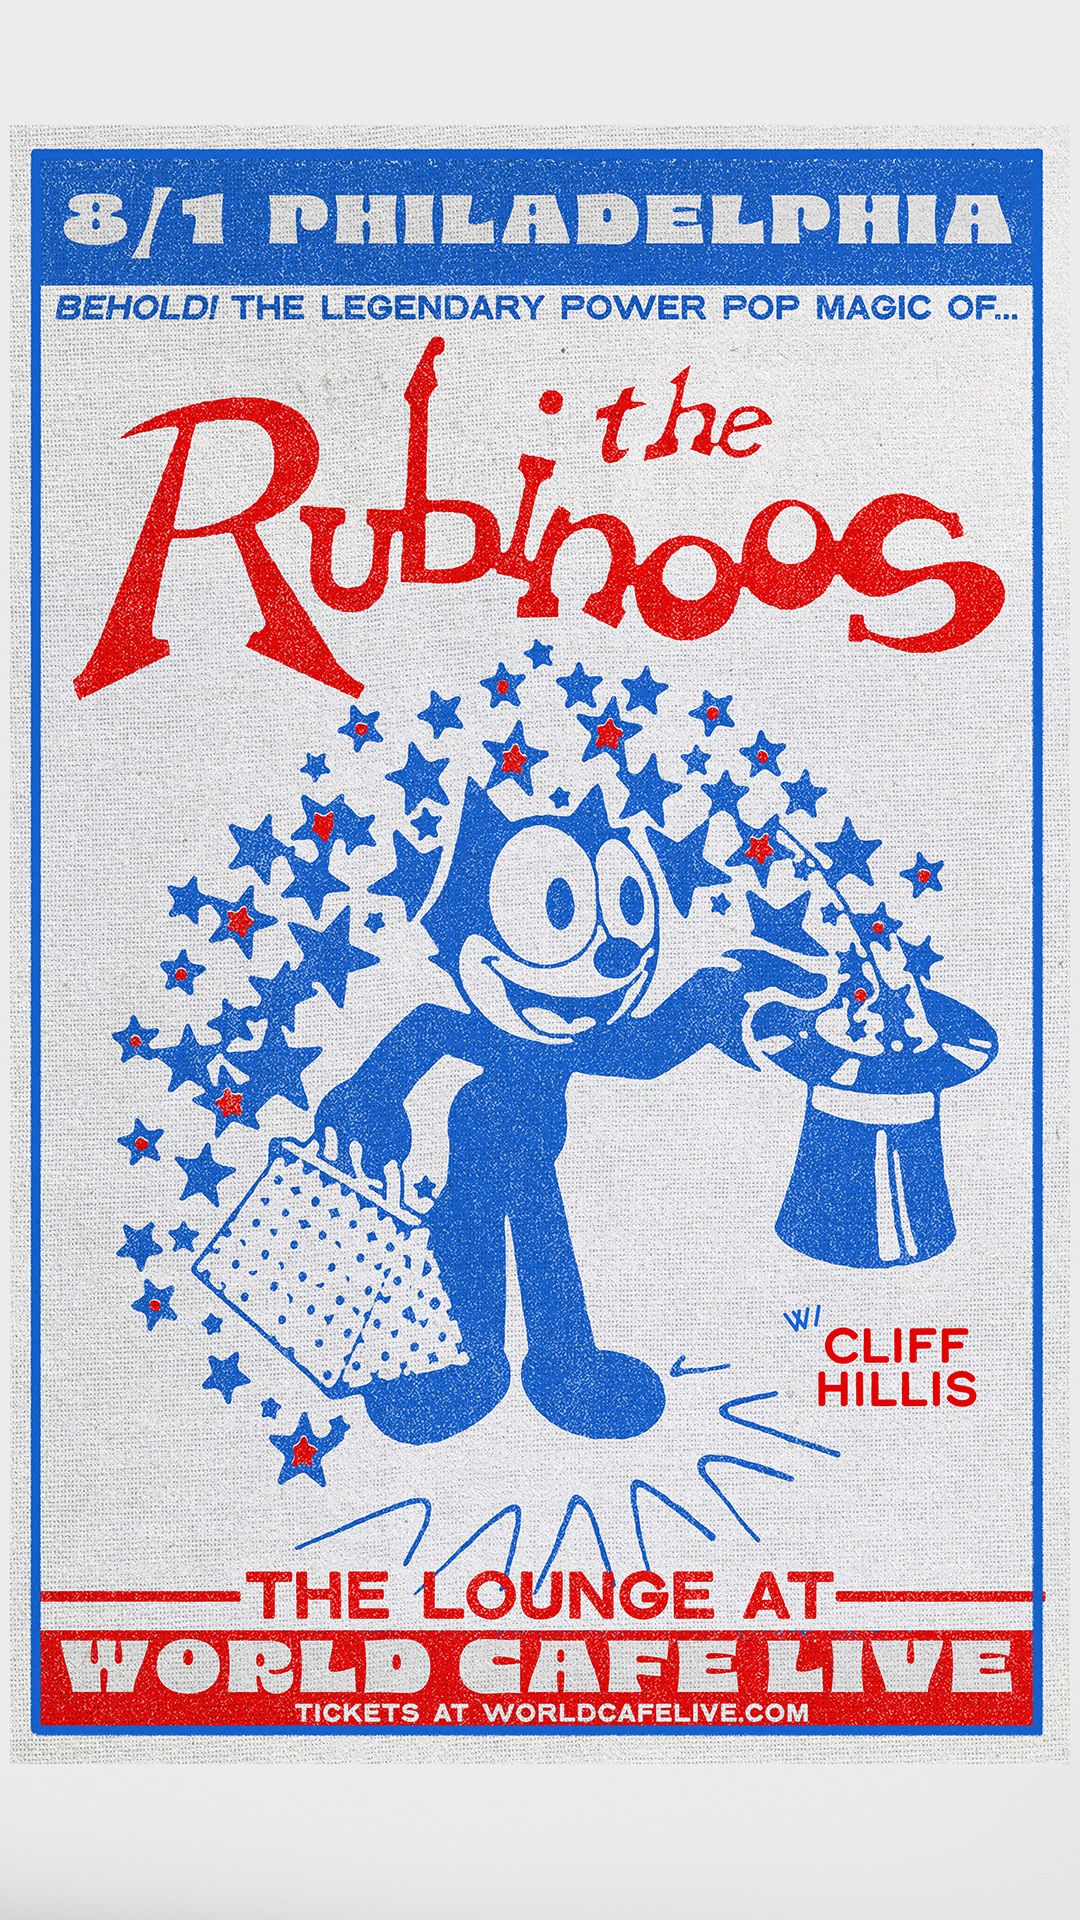 The Rubinoos - World Cafe Live, Philadelphia, PA w Cliff Hillis